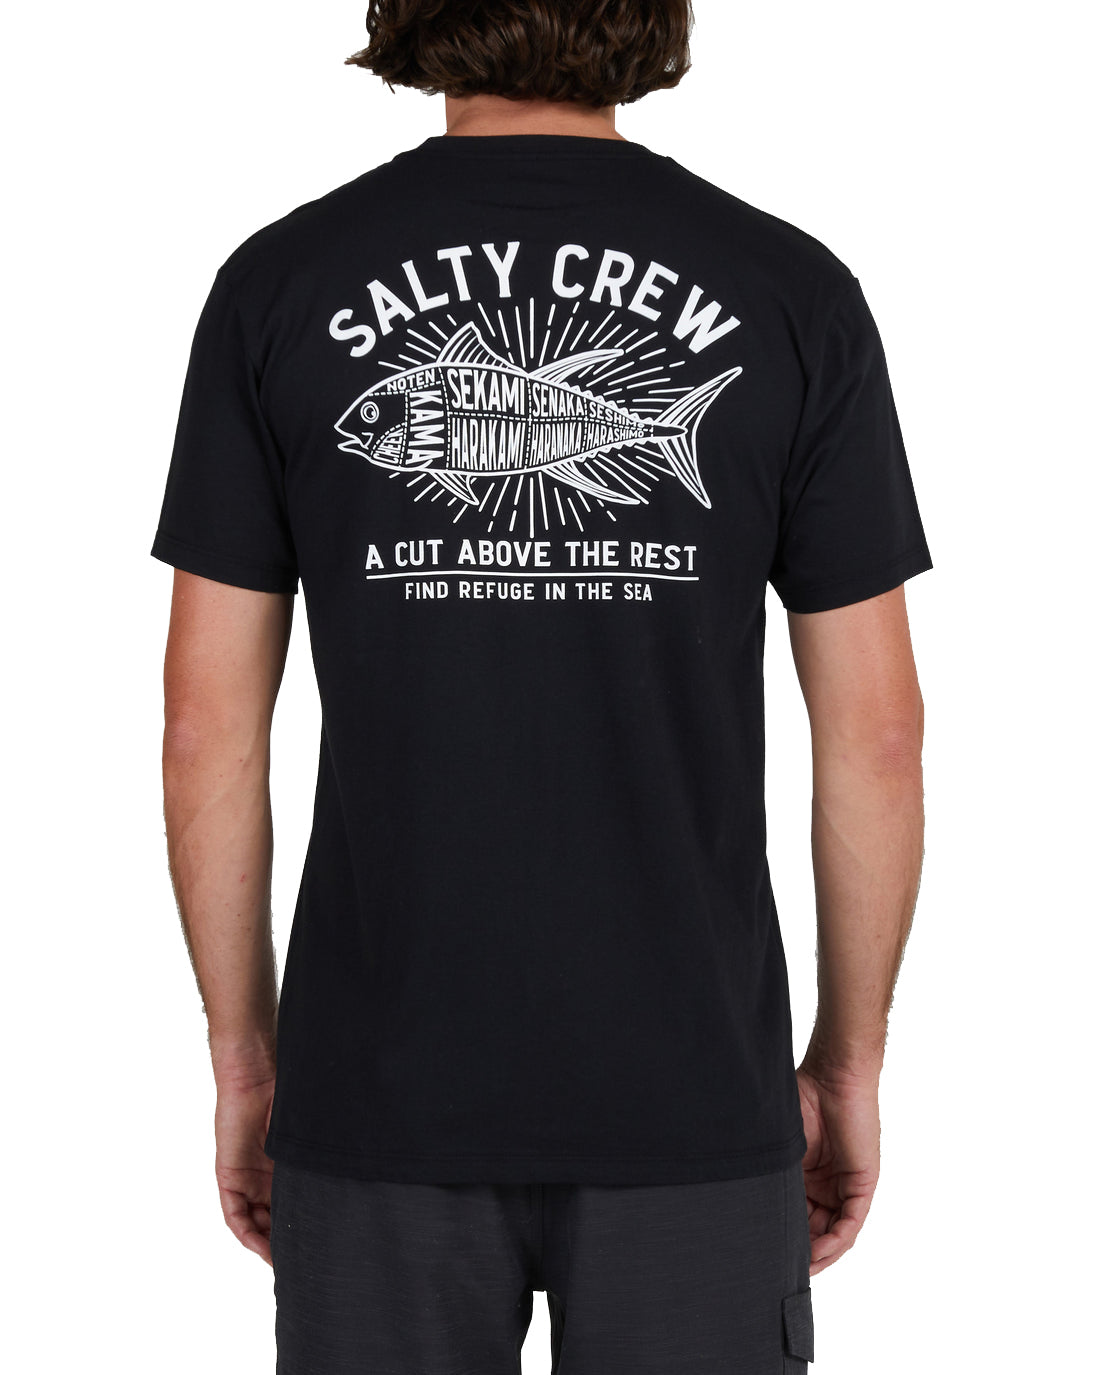 Salty Crew Cut Above SS Tee Black XXXL